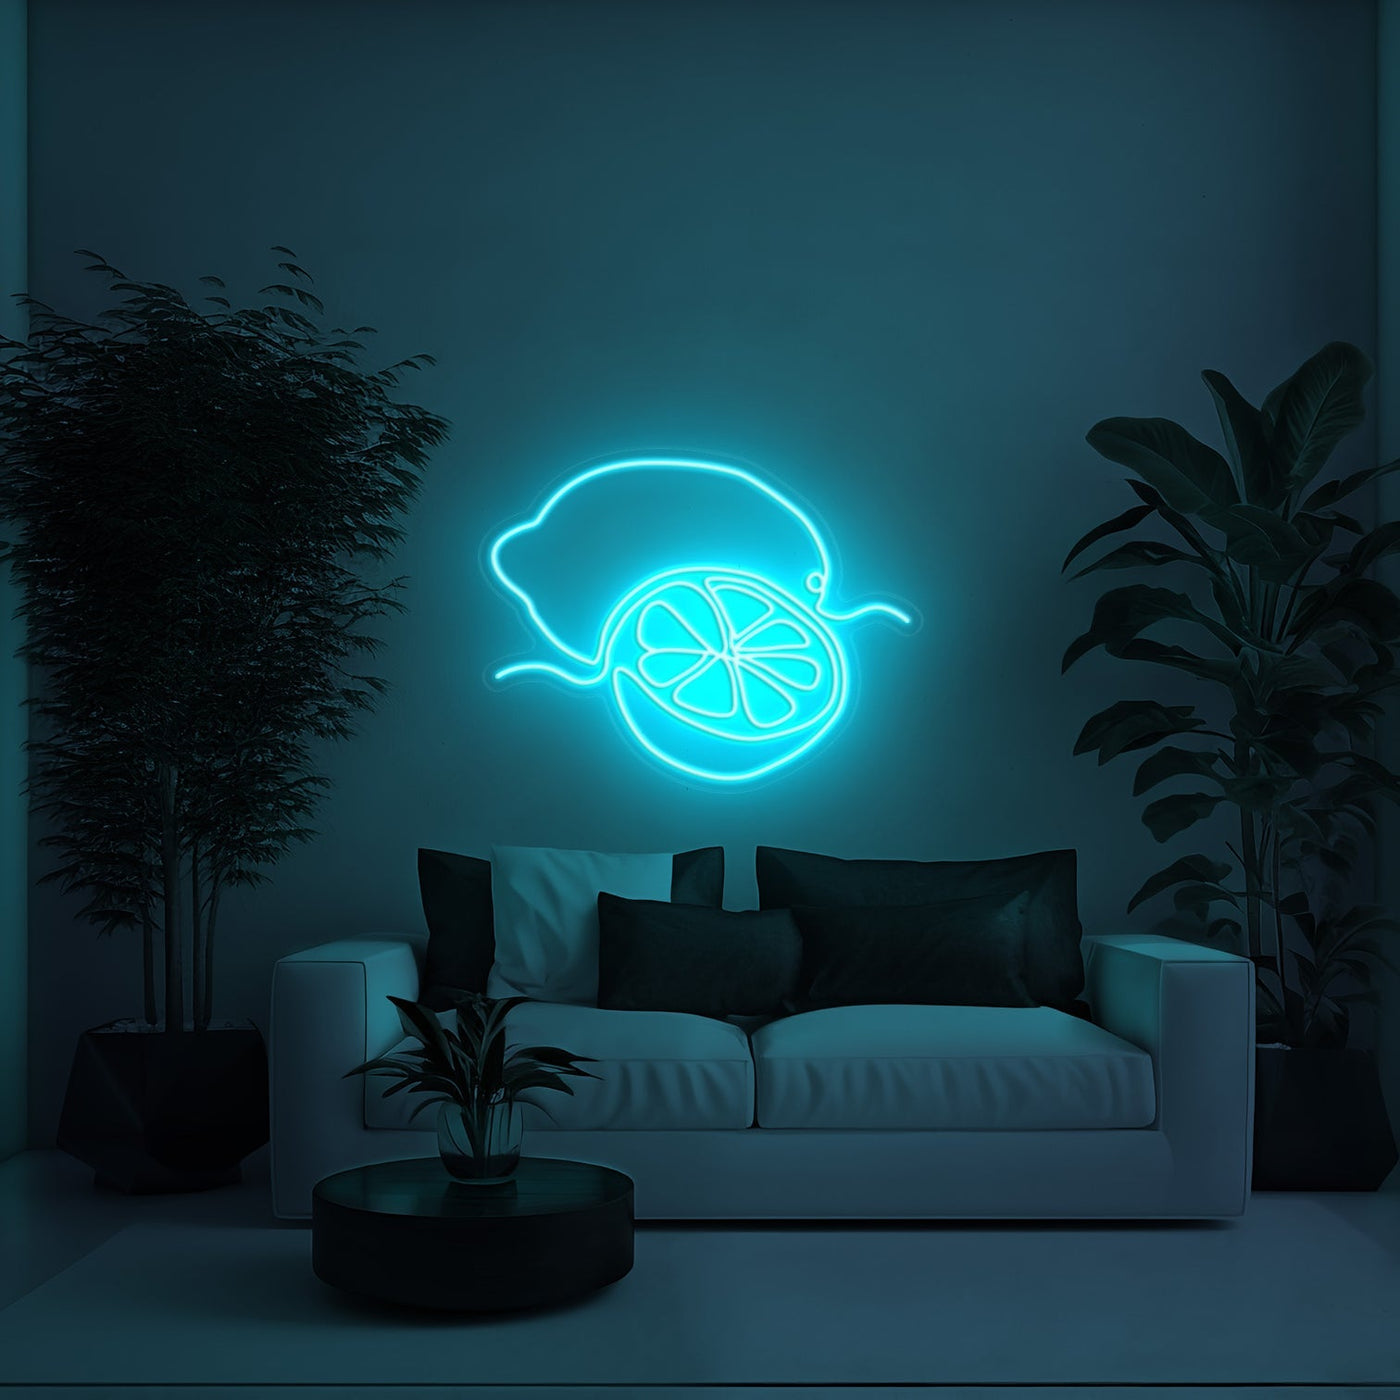 Lemon Aesthetic LED Neon Sign - 30 InchTurquoise